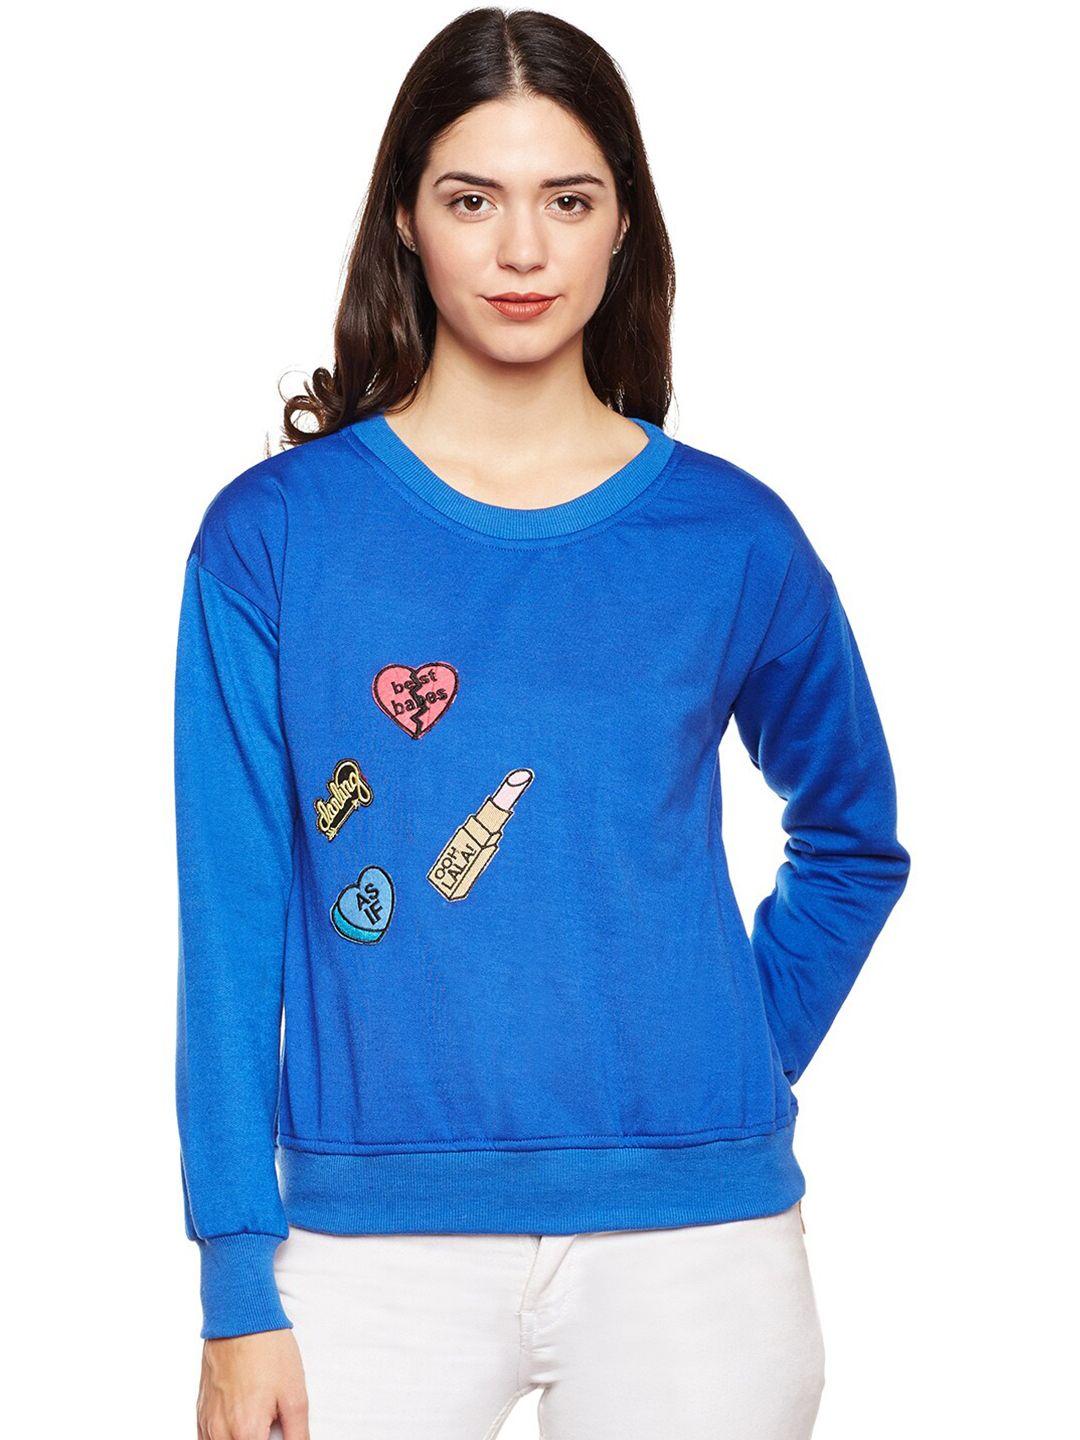 baesd-conversational-embroidered-pullover-fleece-sweatshirt